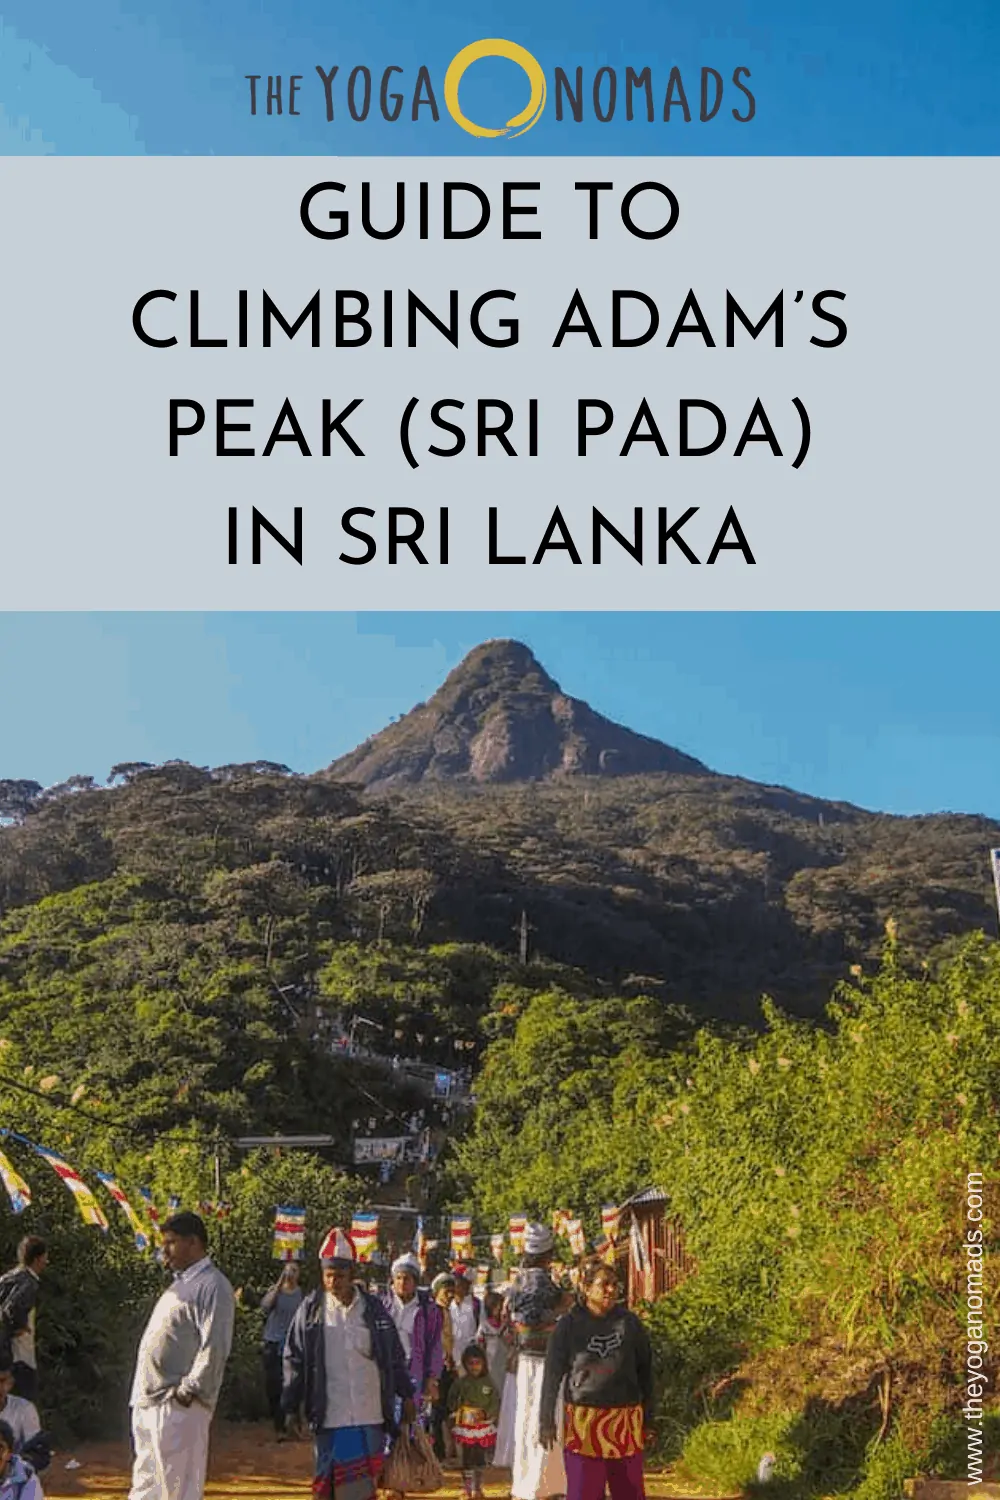  Guide to Climbing Adam's Peak in Sri Lanka